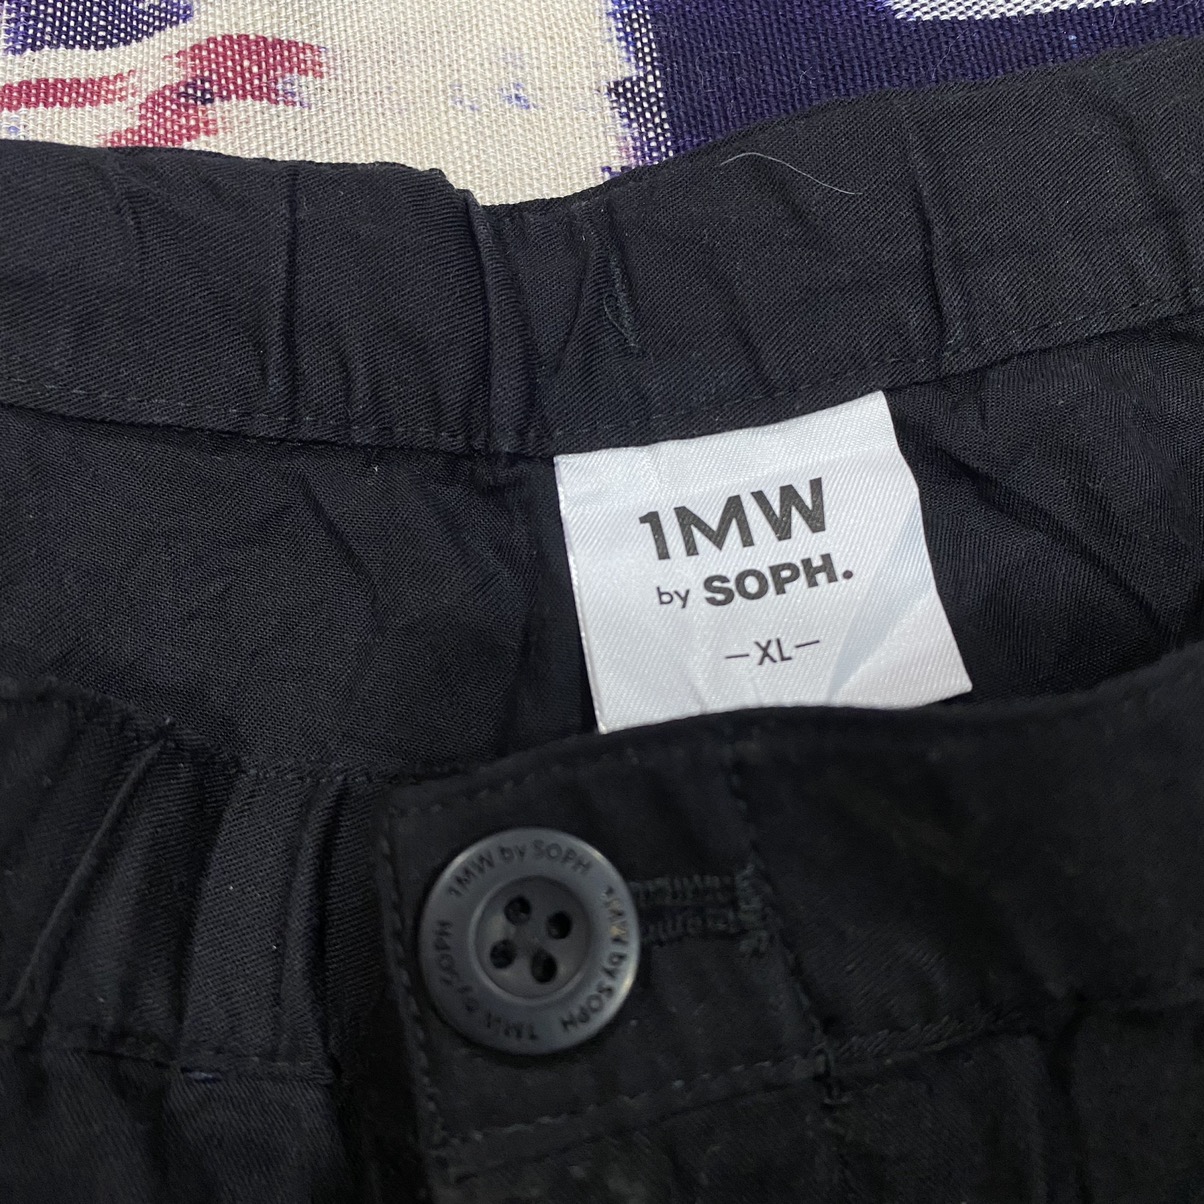 Sophnet 1MW Shorts - 4